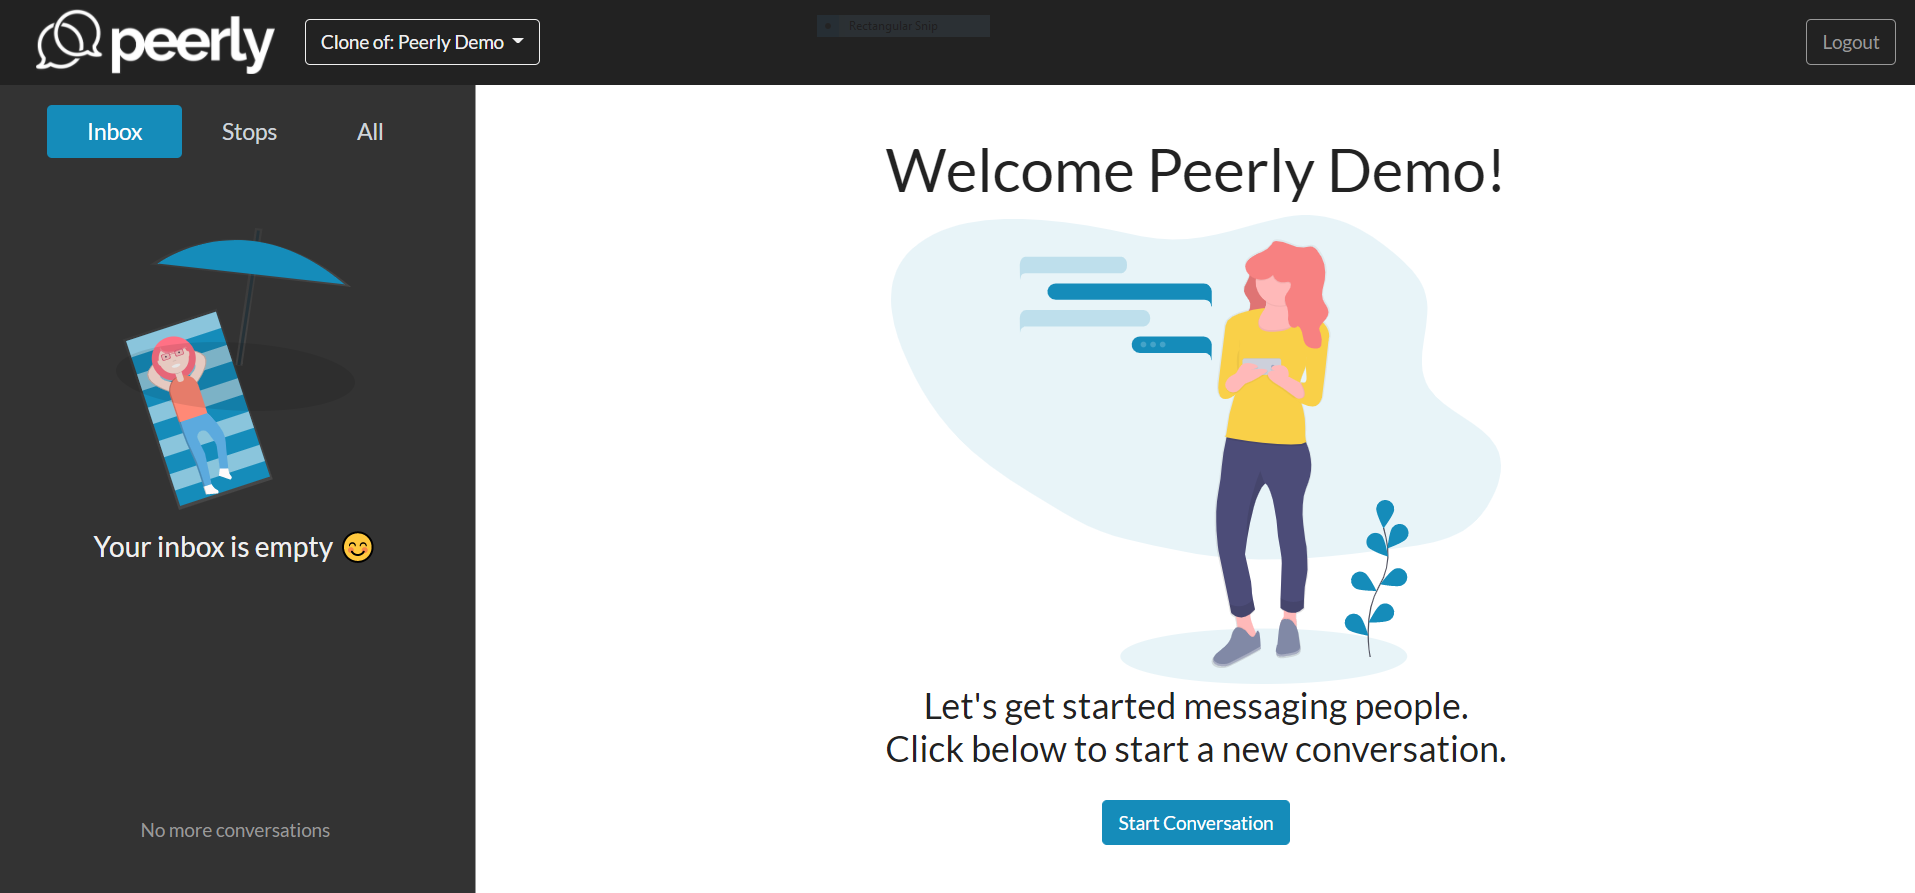 p2p texting platform peerly